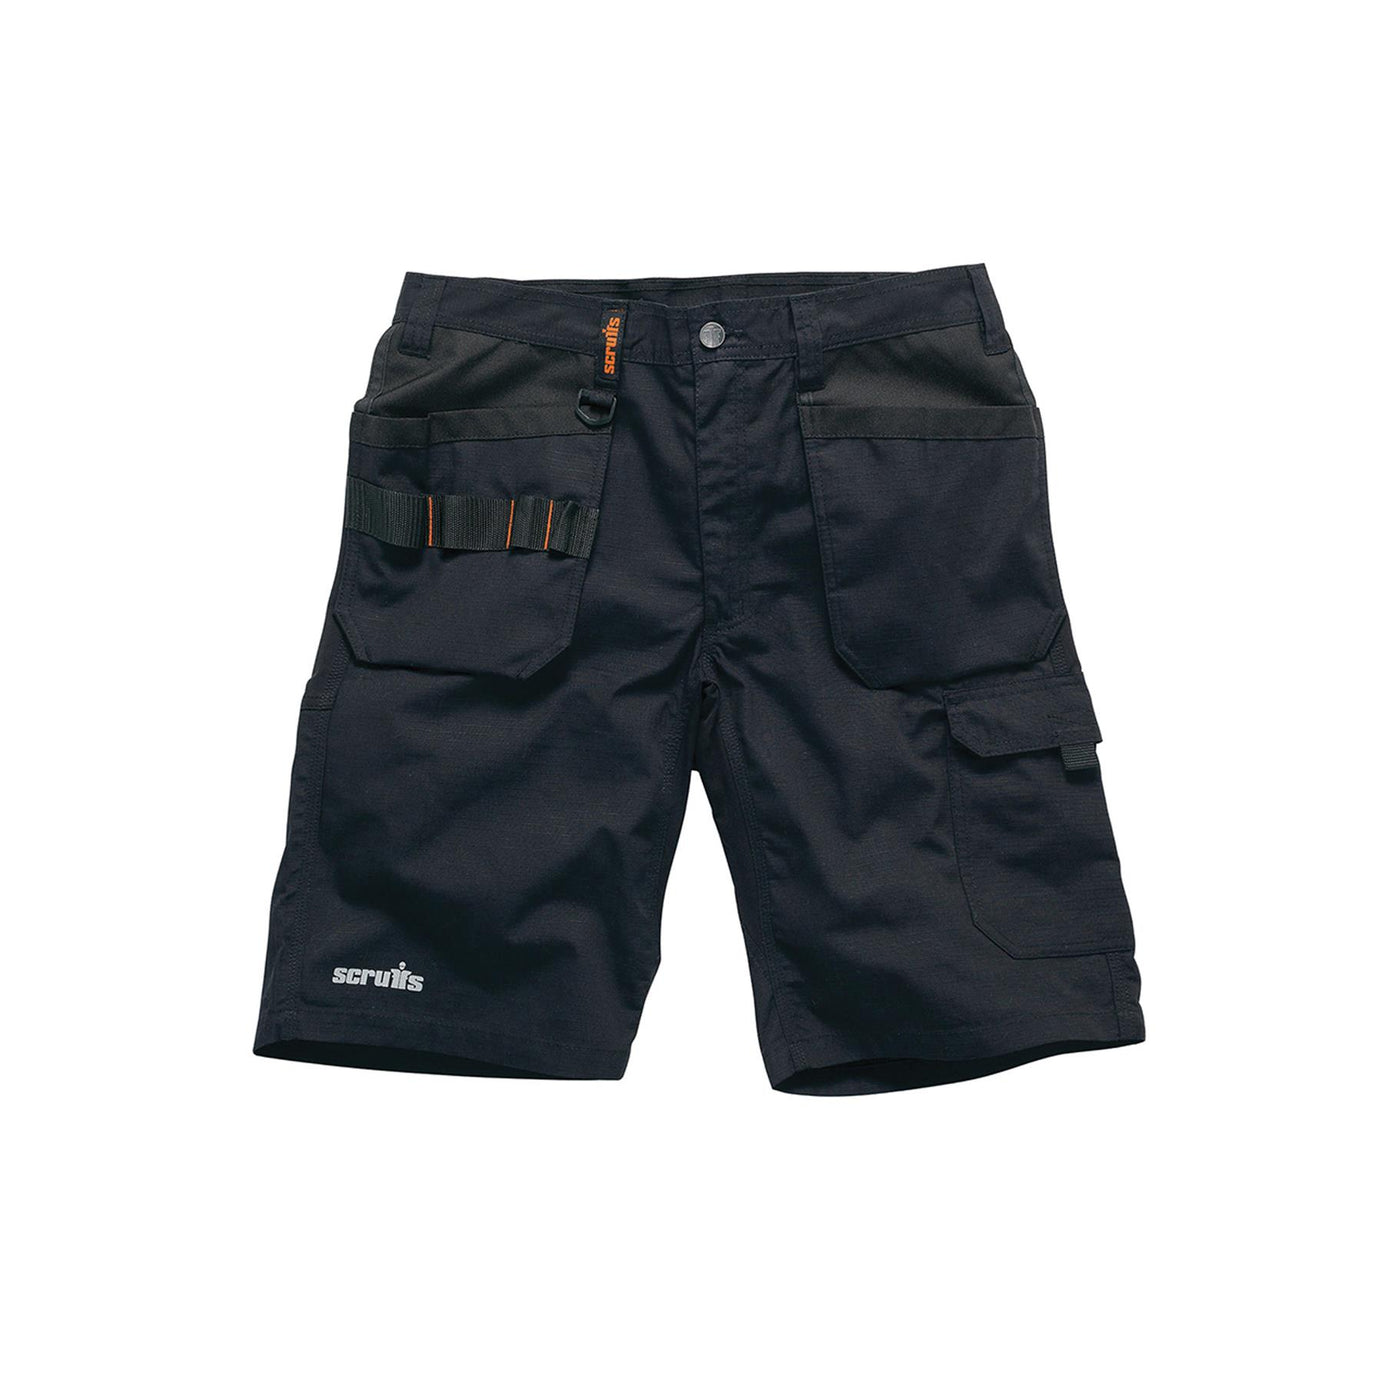 Scruffs Flex Holster Shorts Cargo Combat Pockets Hard Wearing Black 36 Waist